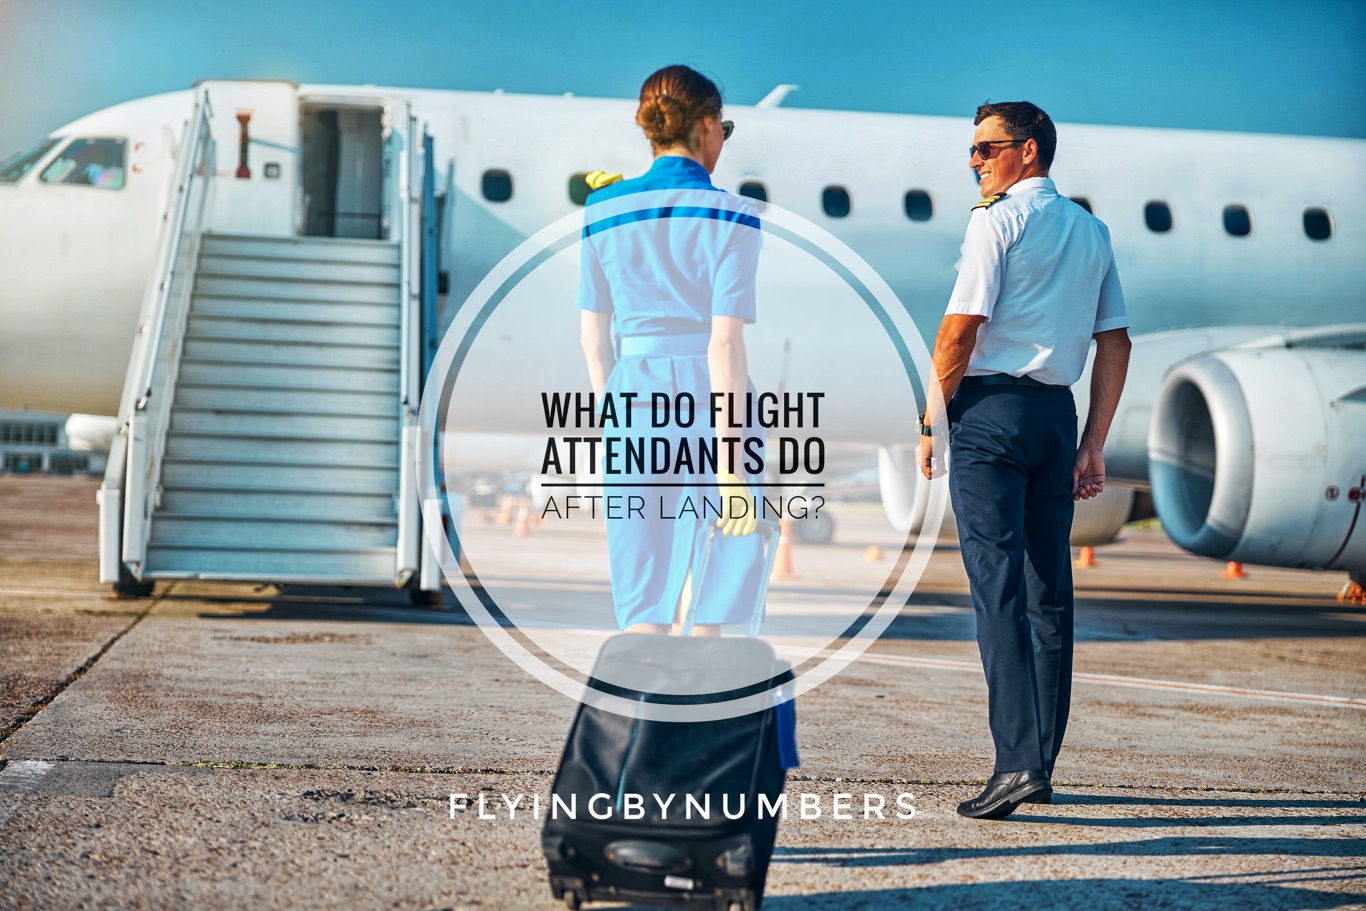 A look at what flight attendants do after landing